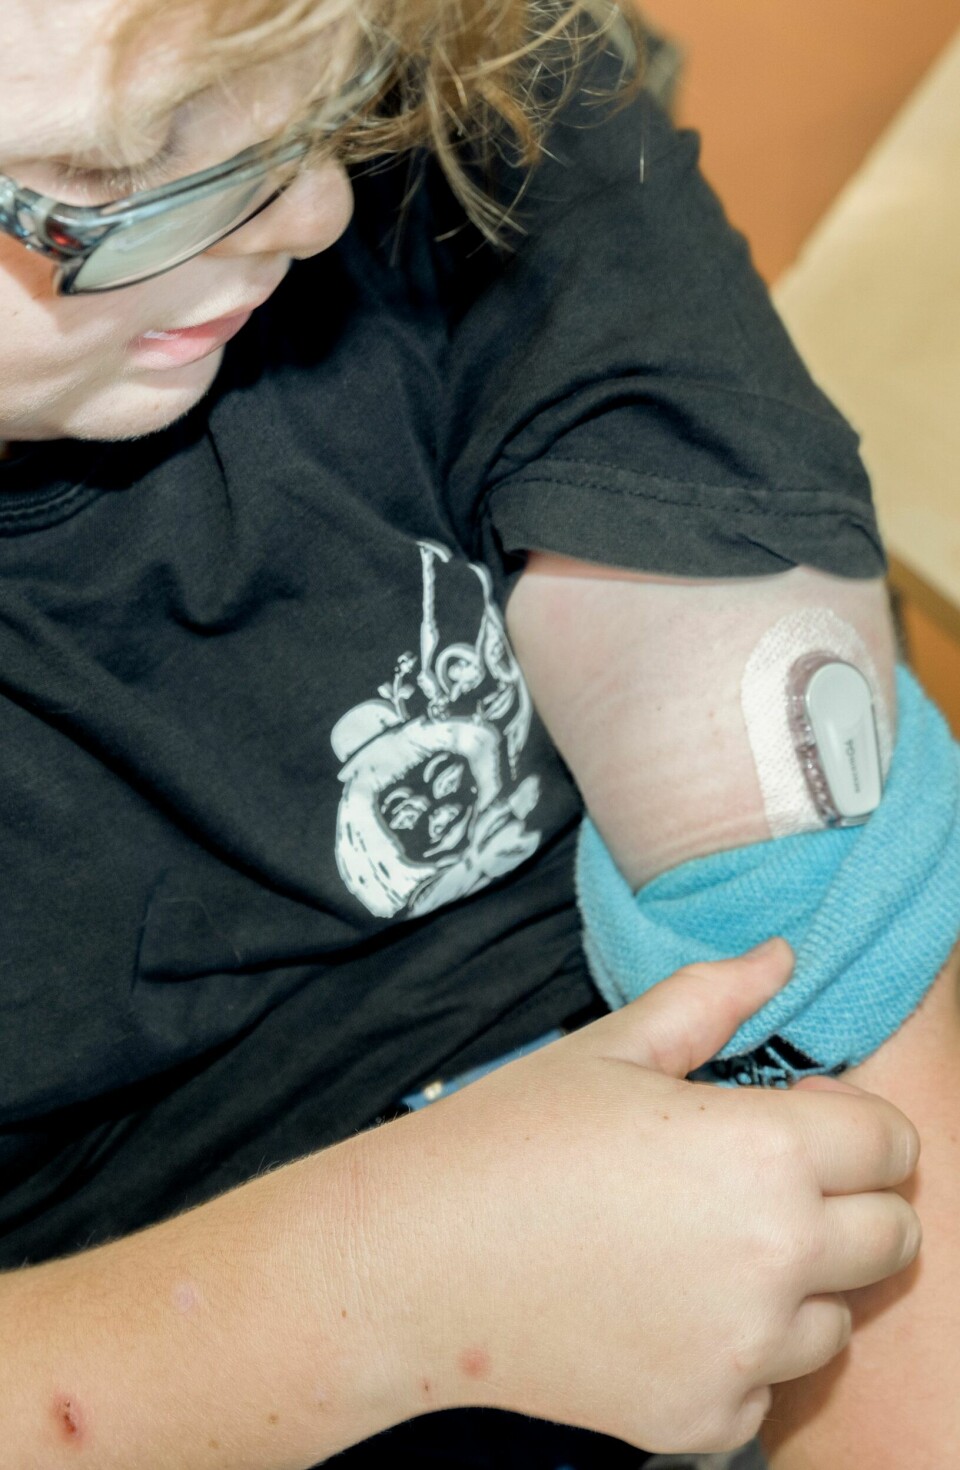 Pelle har altid et blåt svedbånd på armen, og indenunder sidder en blodsukkermåler, som sender data til hans mors smart-ur og telefon.